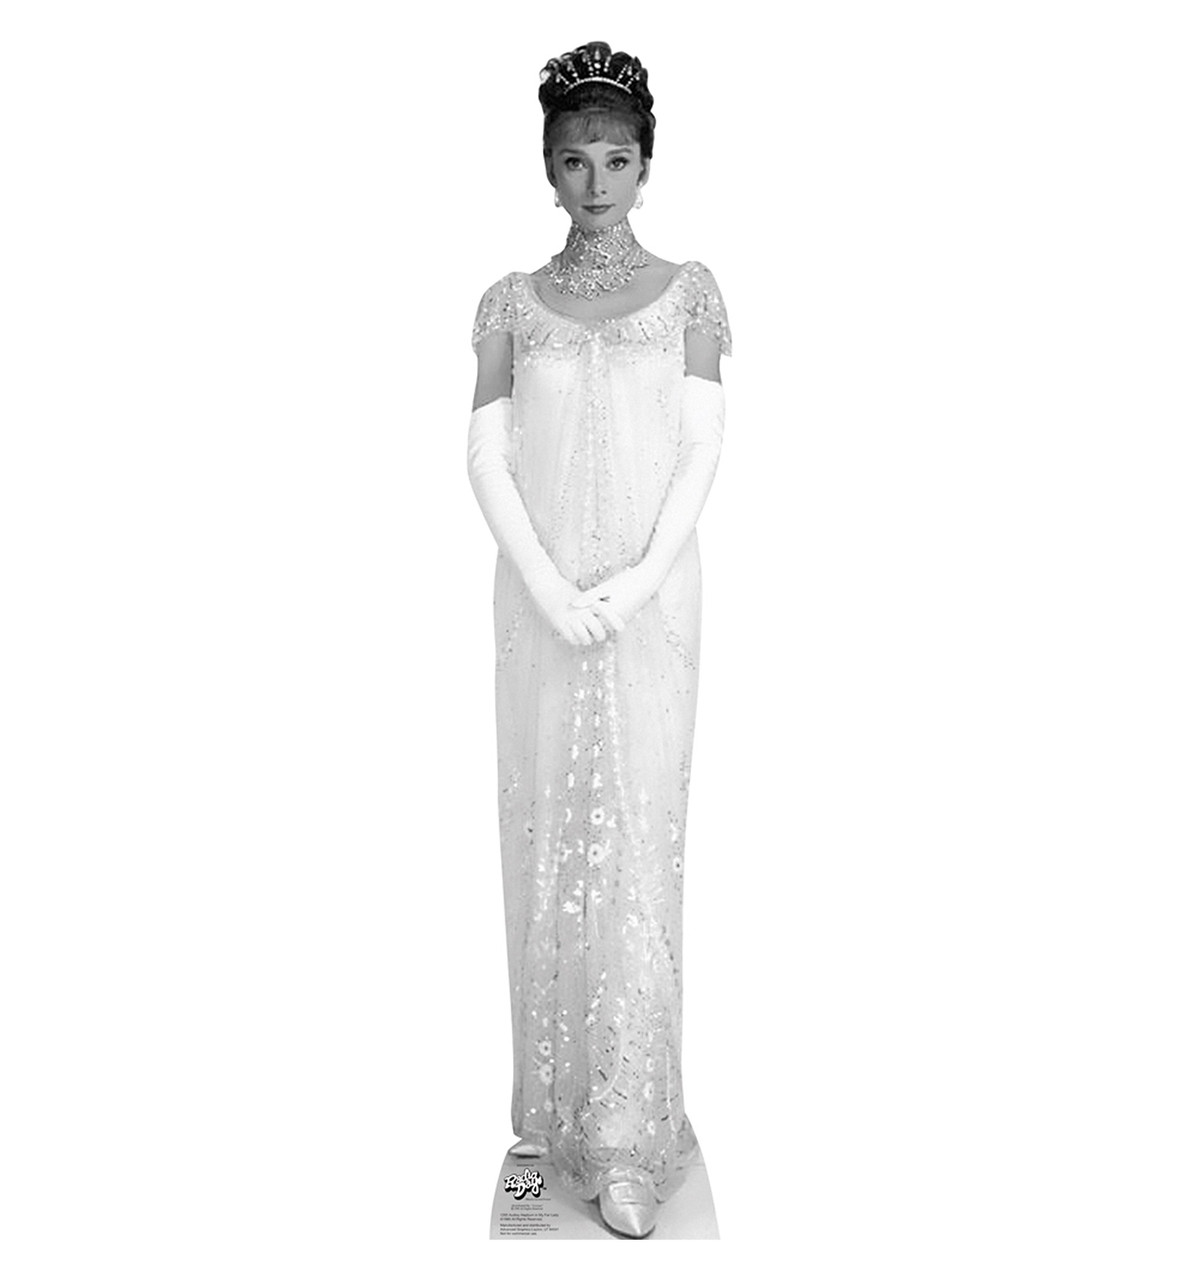 Life-size Audrey Hepburn - My Fair Lady 2 Cardboard Standup | Cardboard Cutout